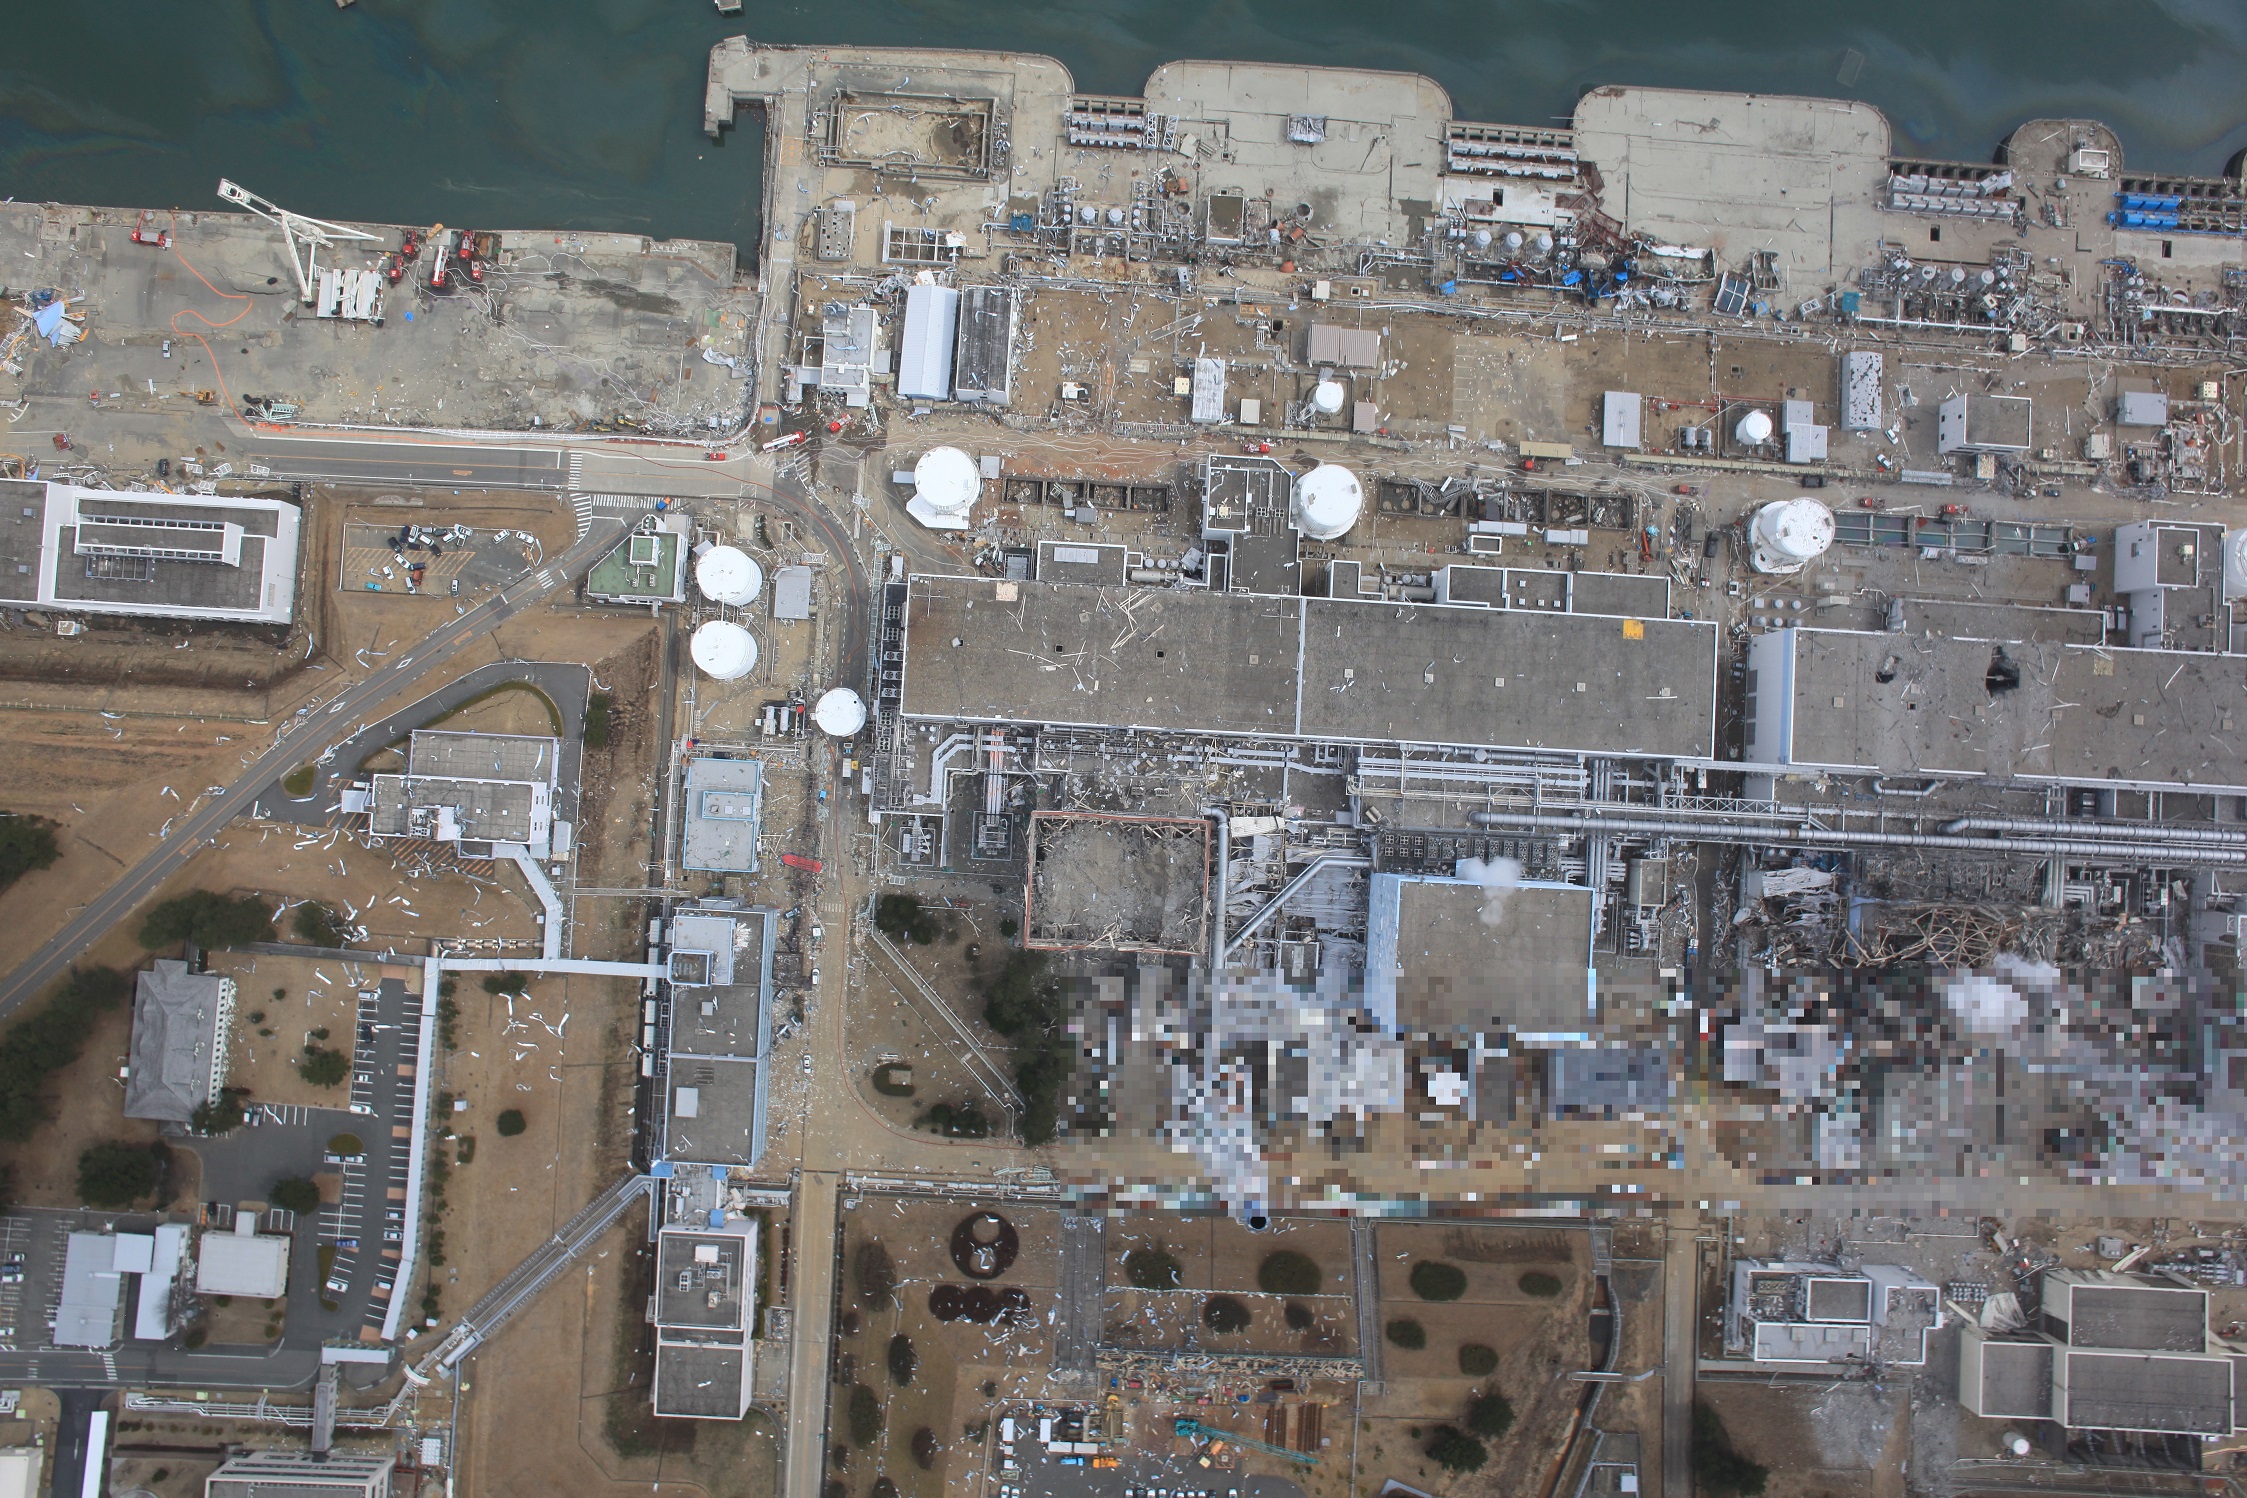 福島第一原子力発電所事故の状況に係る写真